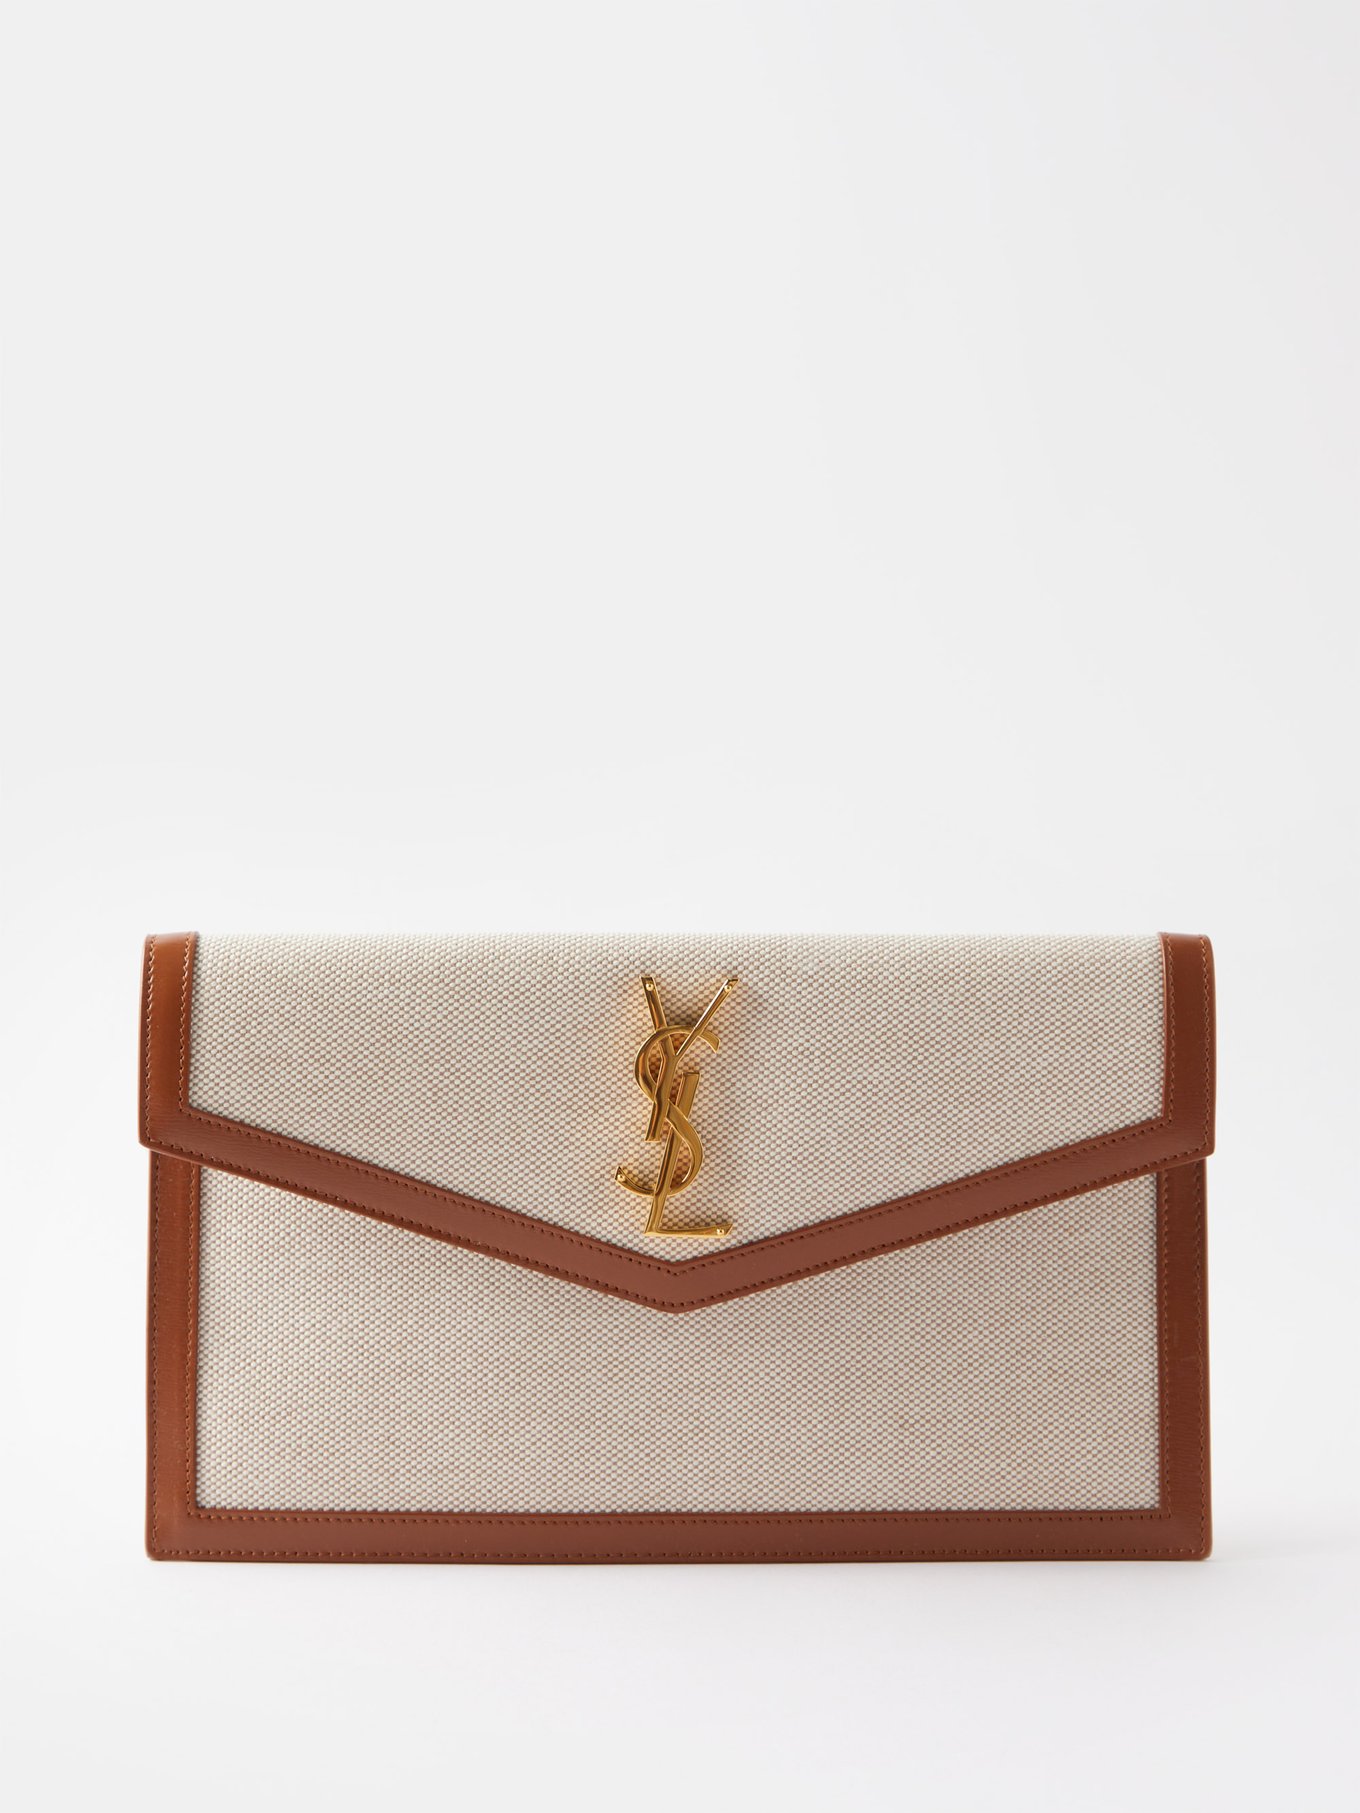 Louis Vuitton Beige Monogram Denim & Leather Espadrilles Wedge